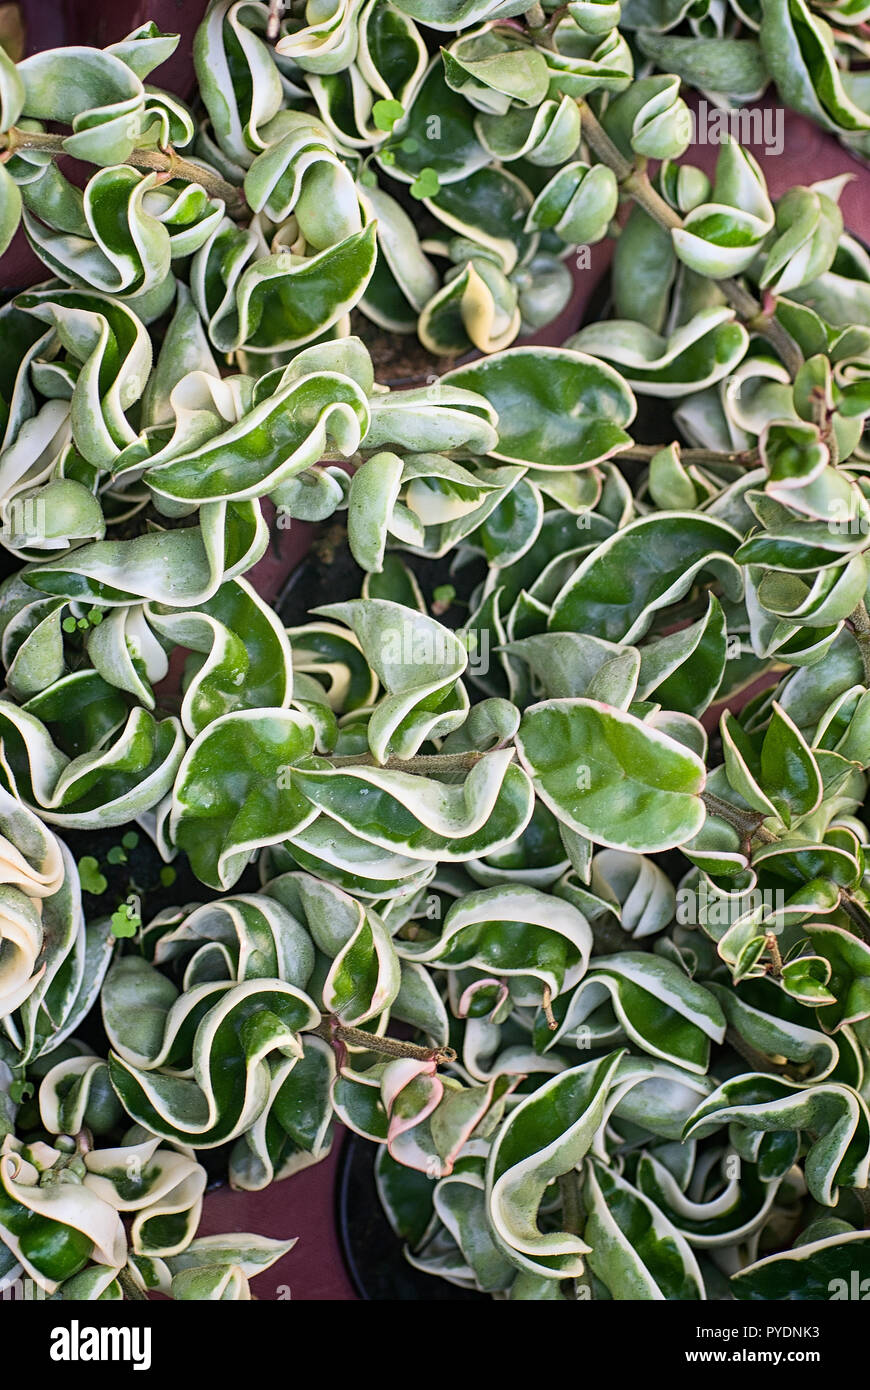 Hoya carnosa cv compacta, Asclepiadaceae,   leaves and inflorescence, vine, ornamental plant Stock Photo